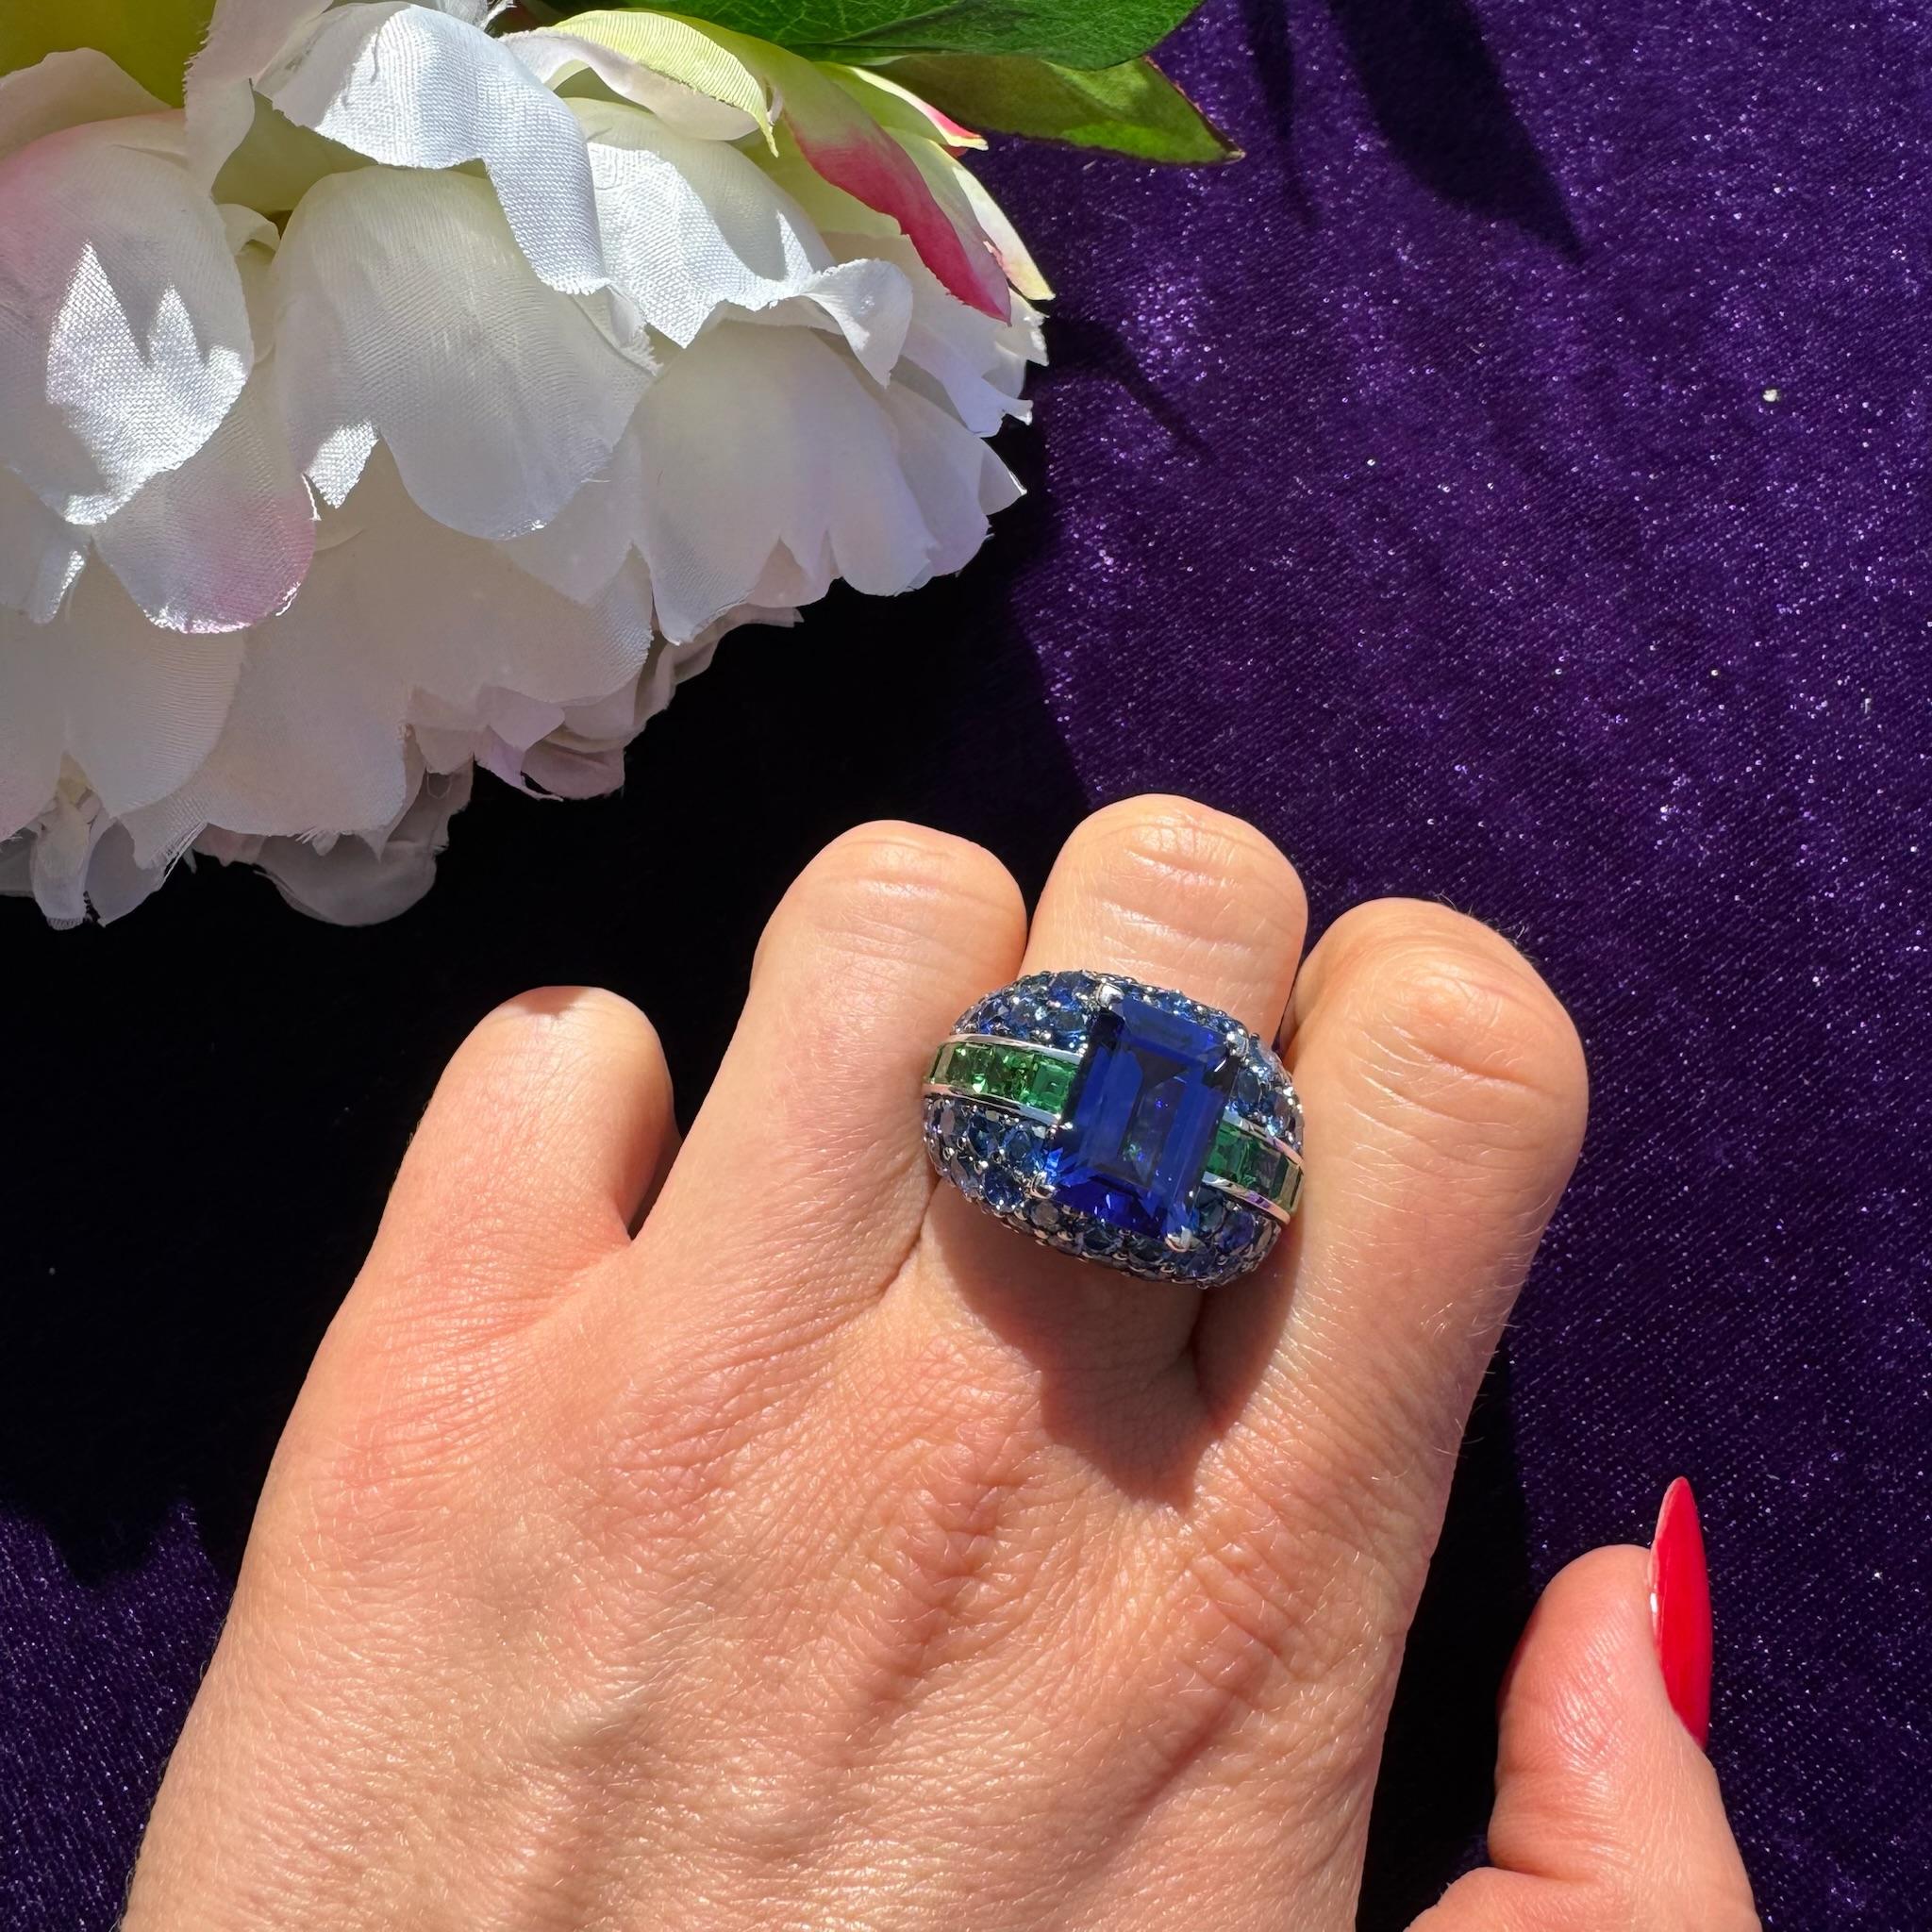 Women's Posh Blue Sapphire Tanzanite 18K White Gold Ring For Her For Sale